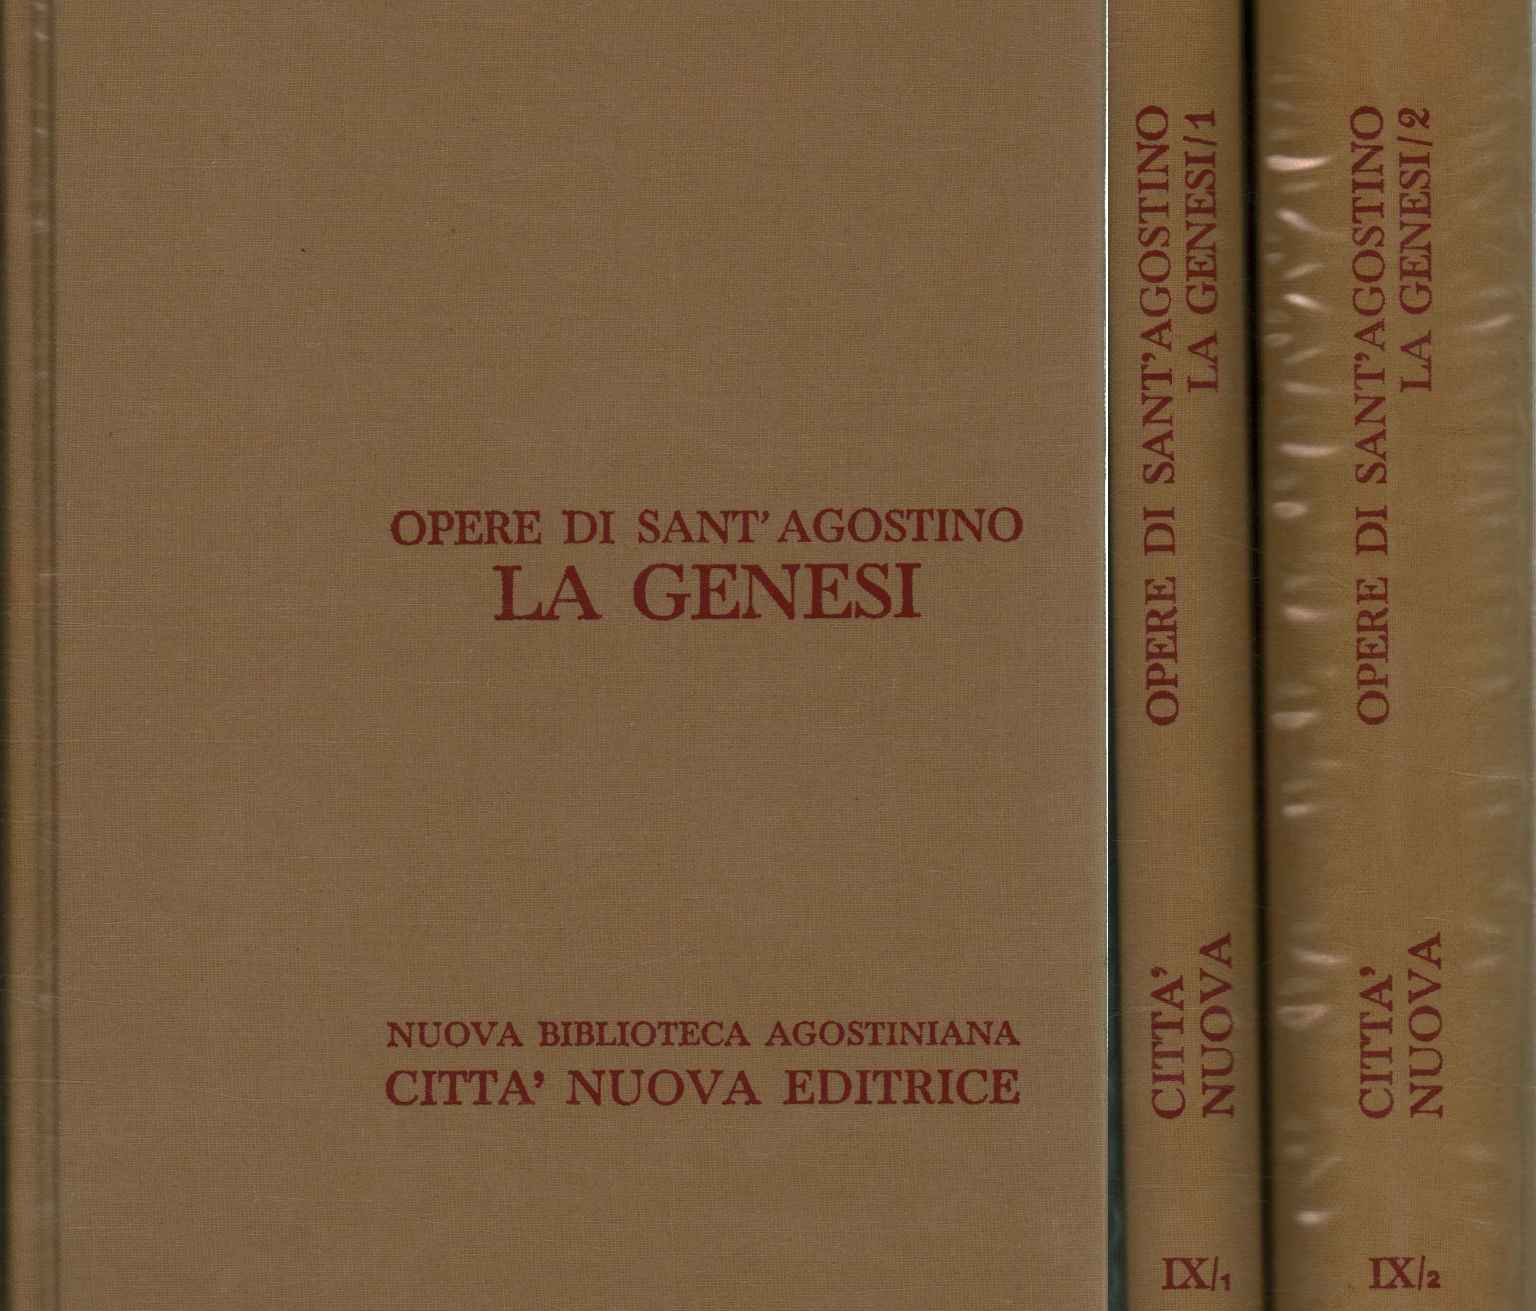 Works of Saint Augustine. Gene